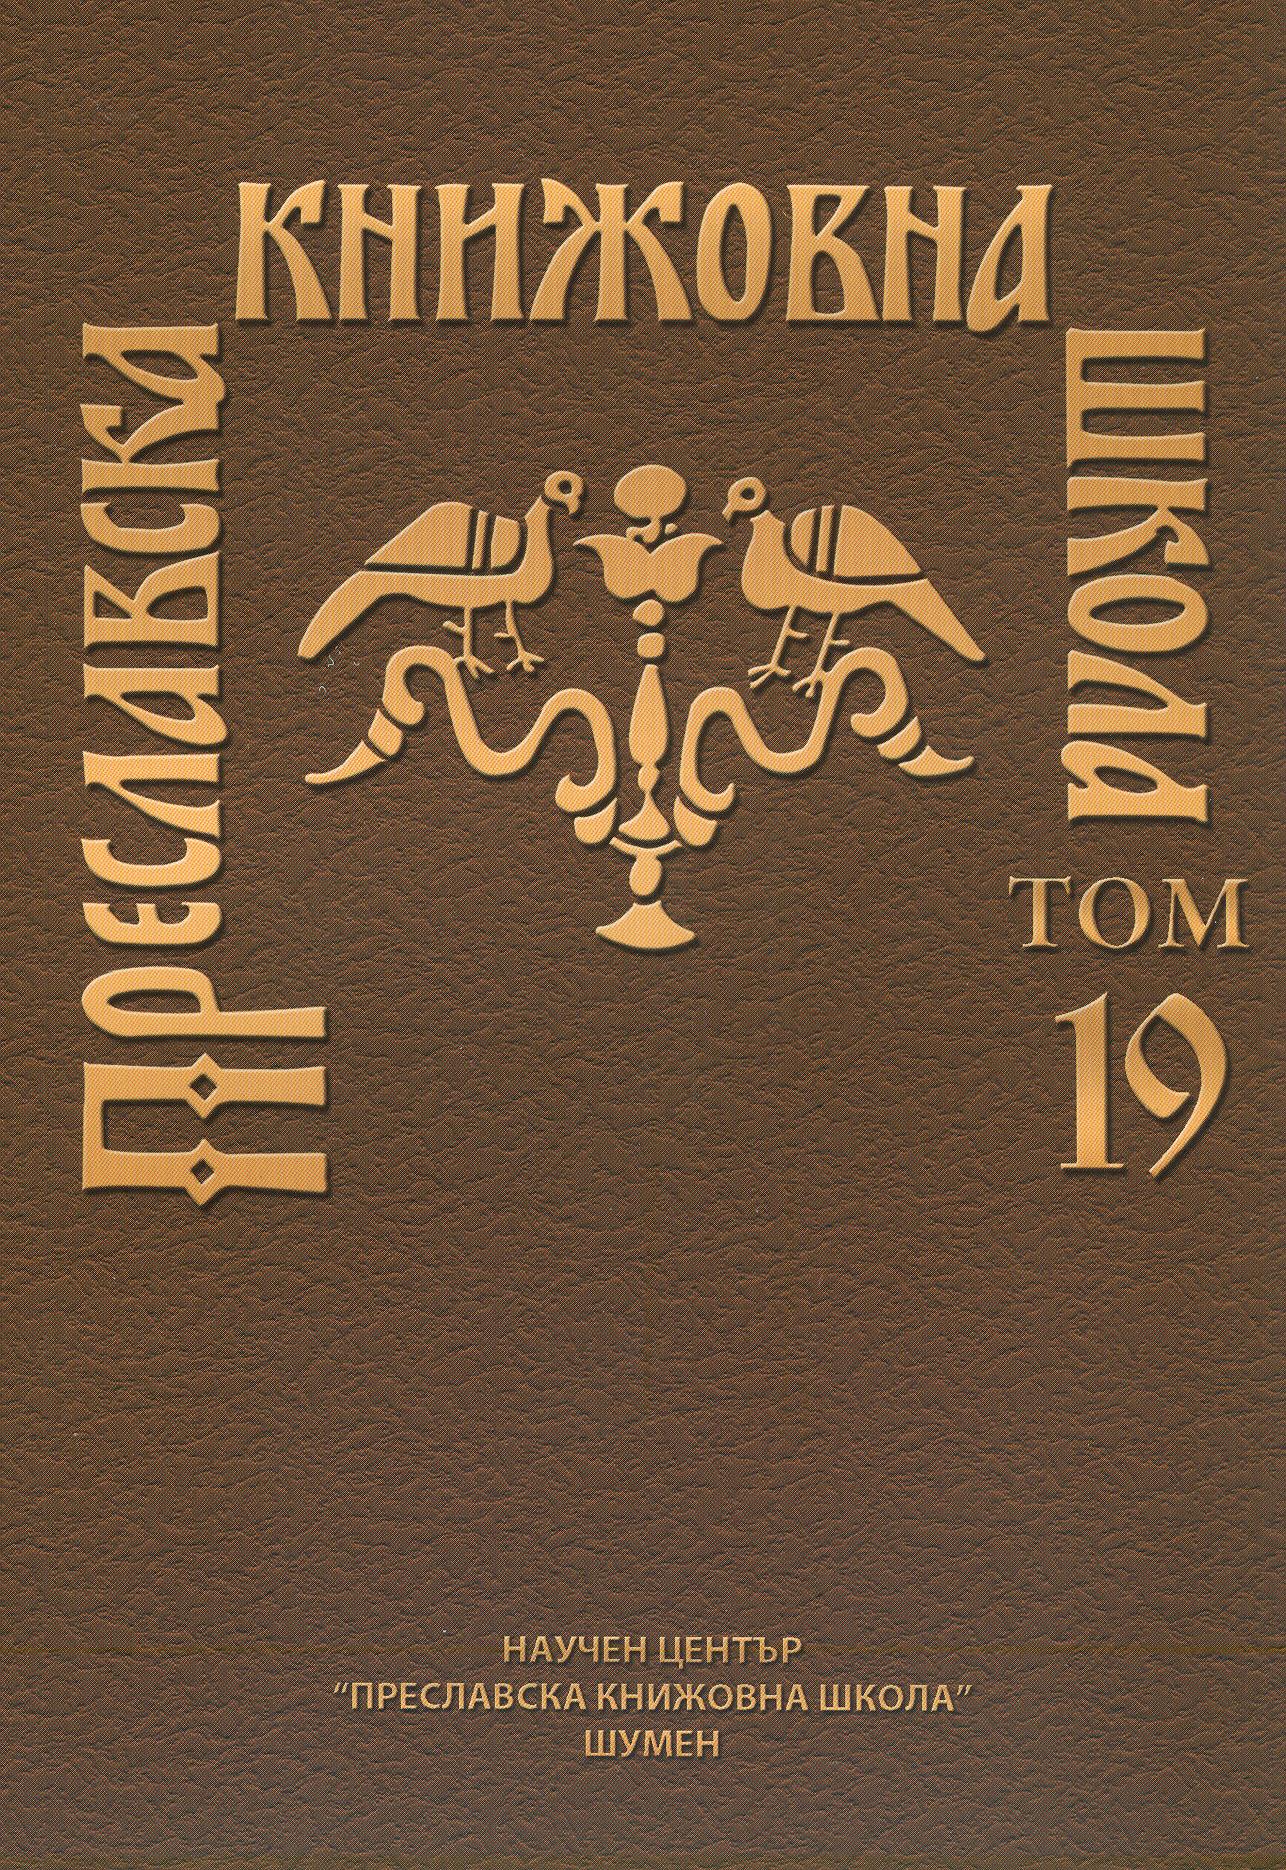 INDEX PHILOSOPHORUM Философите в Православното славянство (IX-XV в.)